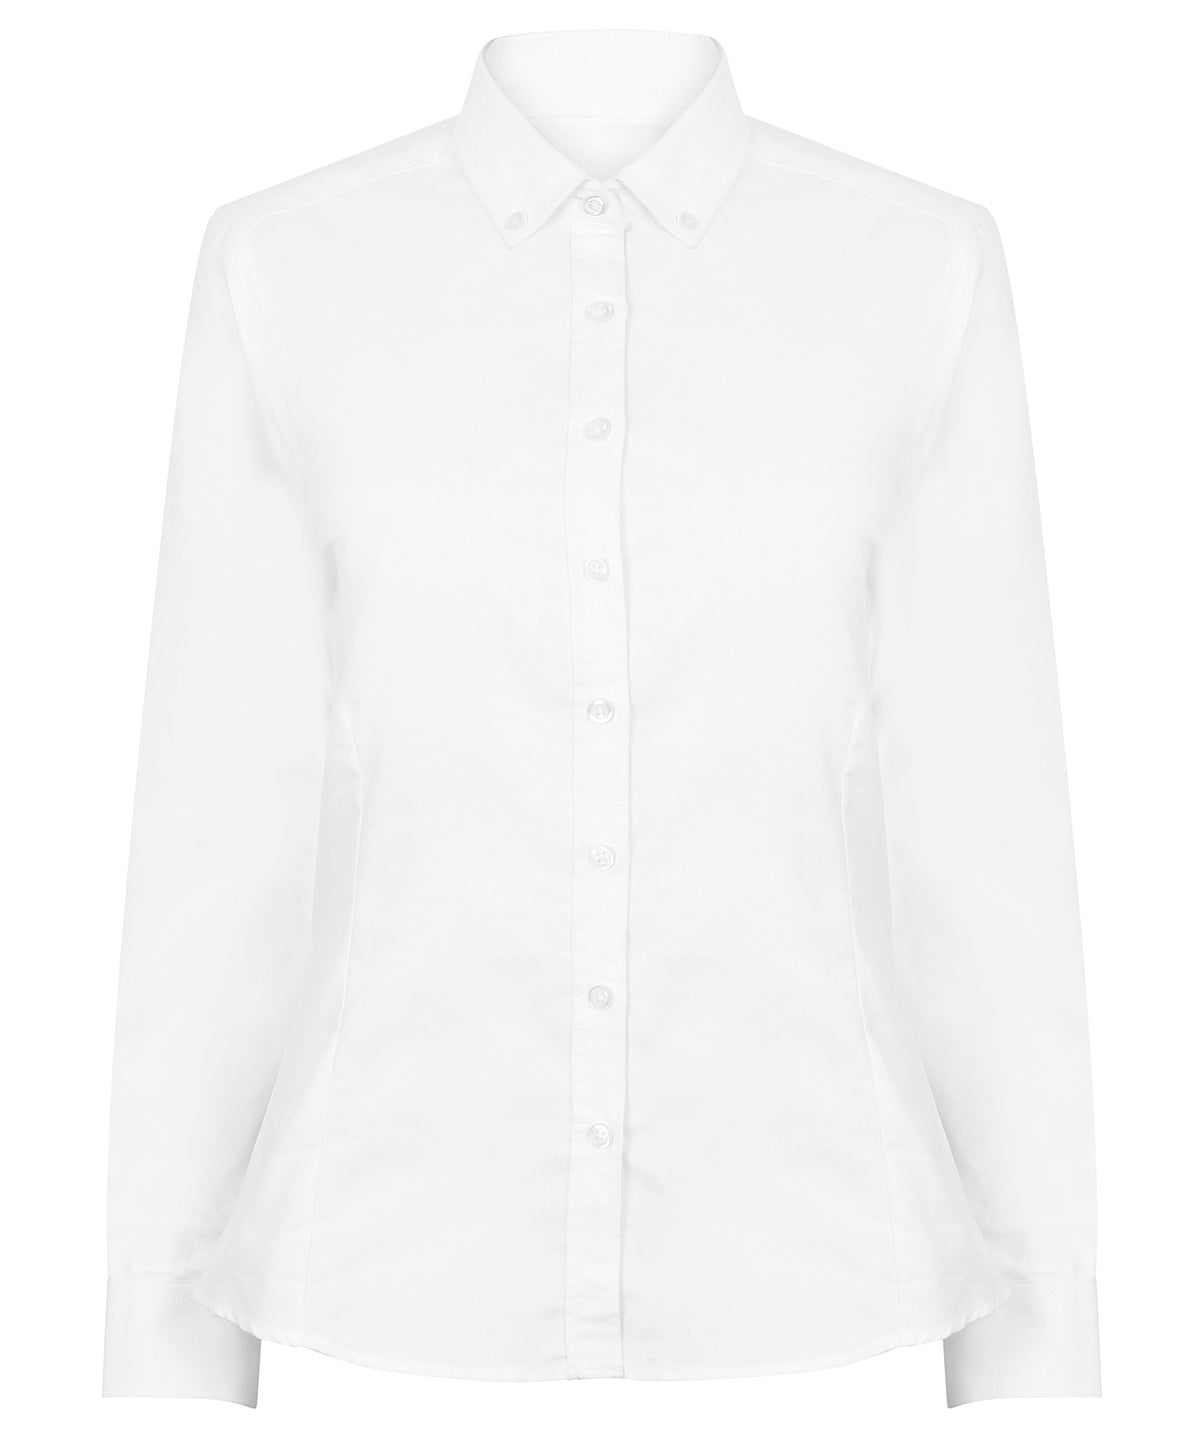 Bolir - Women's Modern Long Sleeve Oxford Shirt